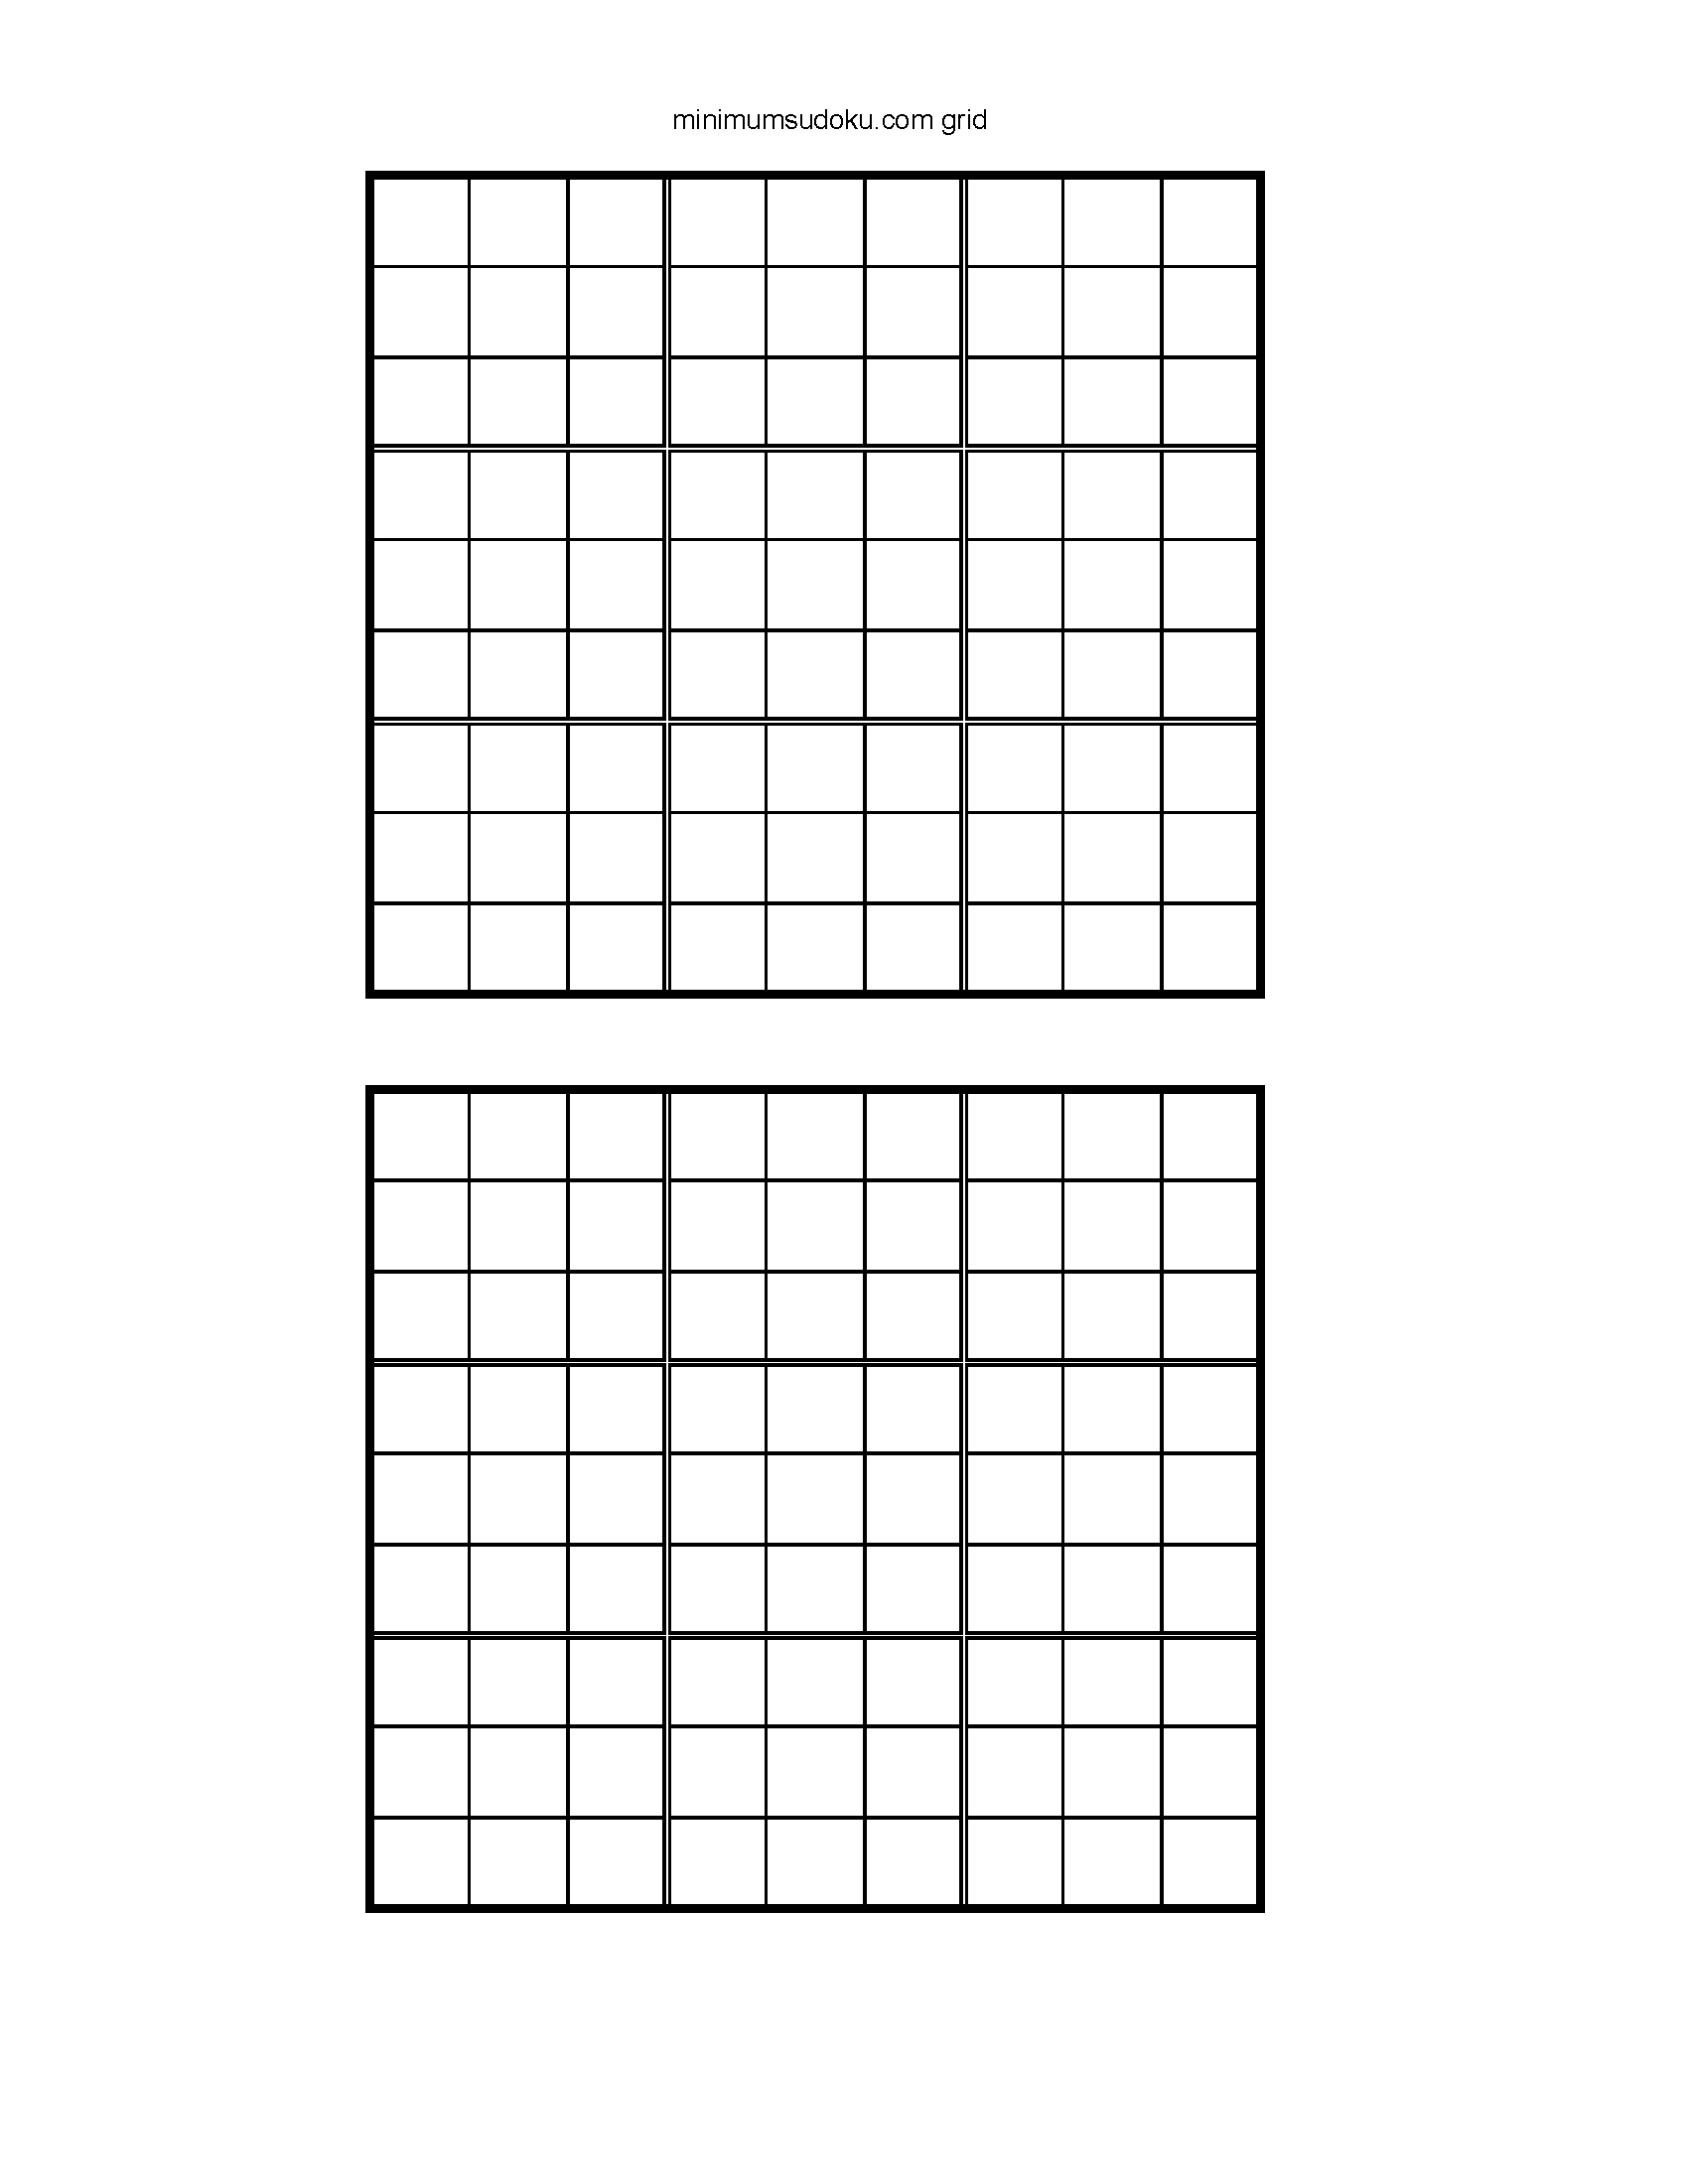 Blank Sudoku Board Printable